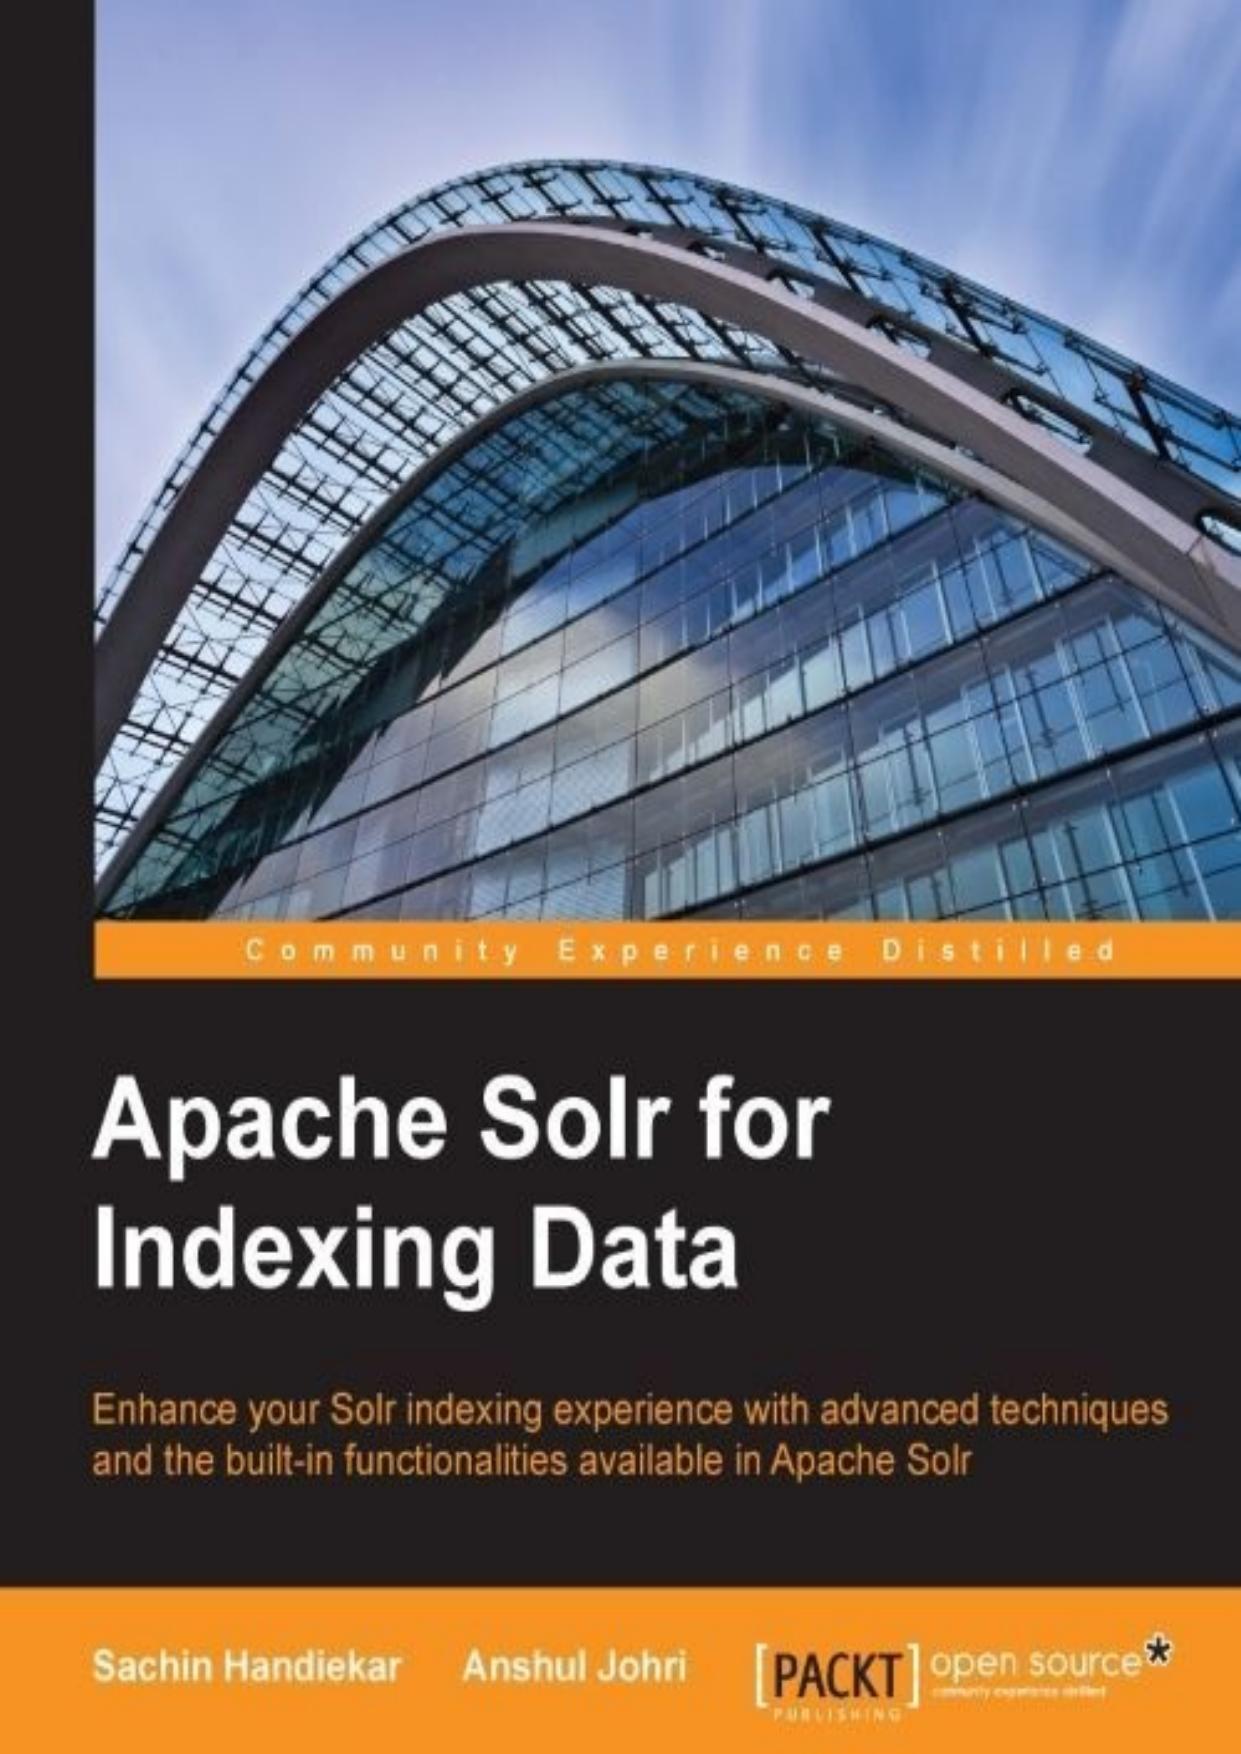 Apache Solr for Indexing Data by Sachin Handiekar & Anshul Johri